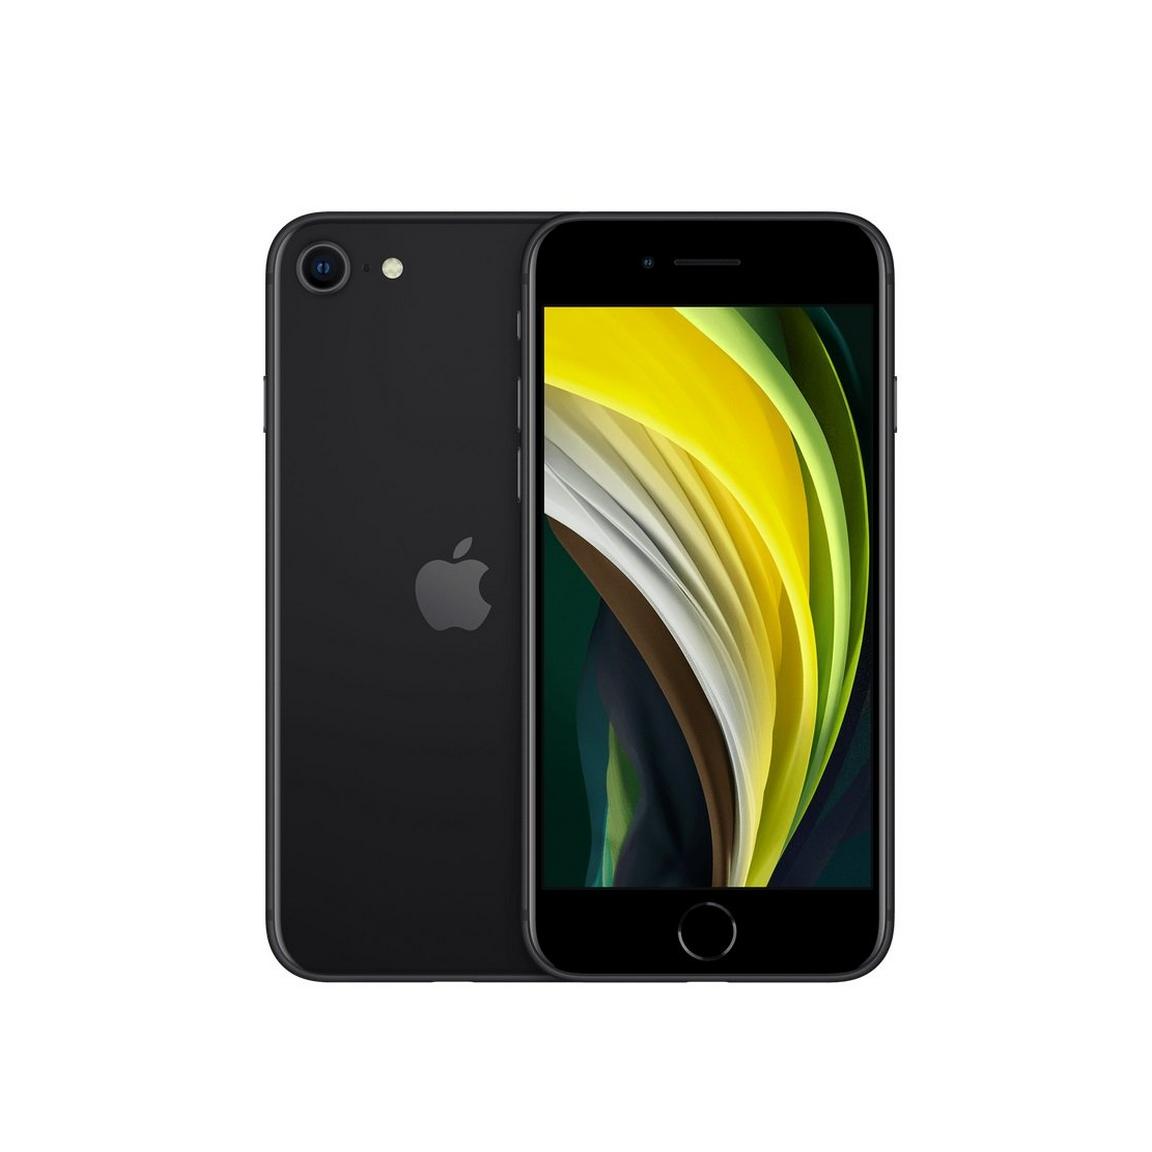 iPhone SE 2 64GB - unlocked (certified refurbished)